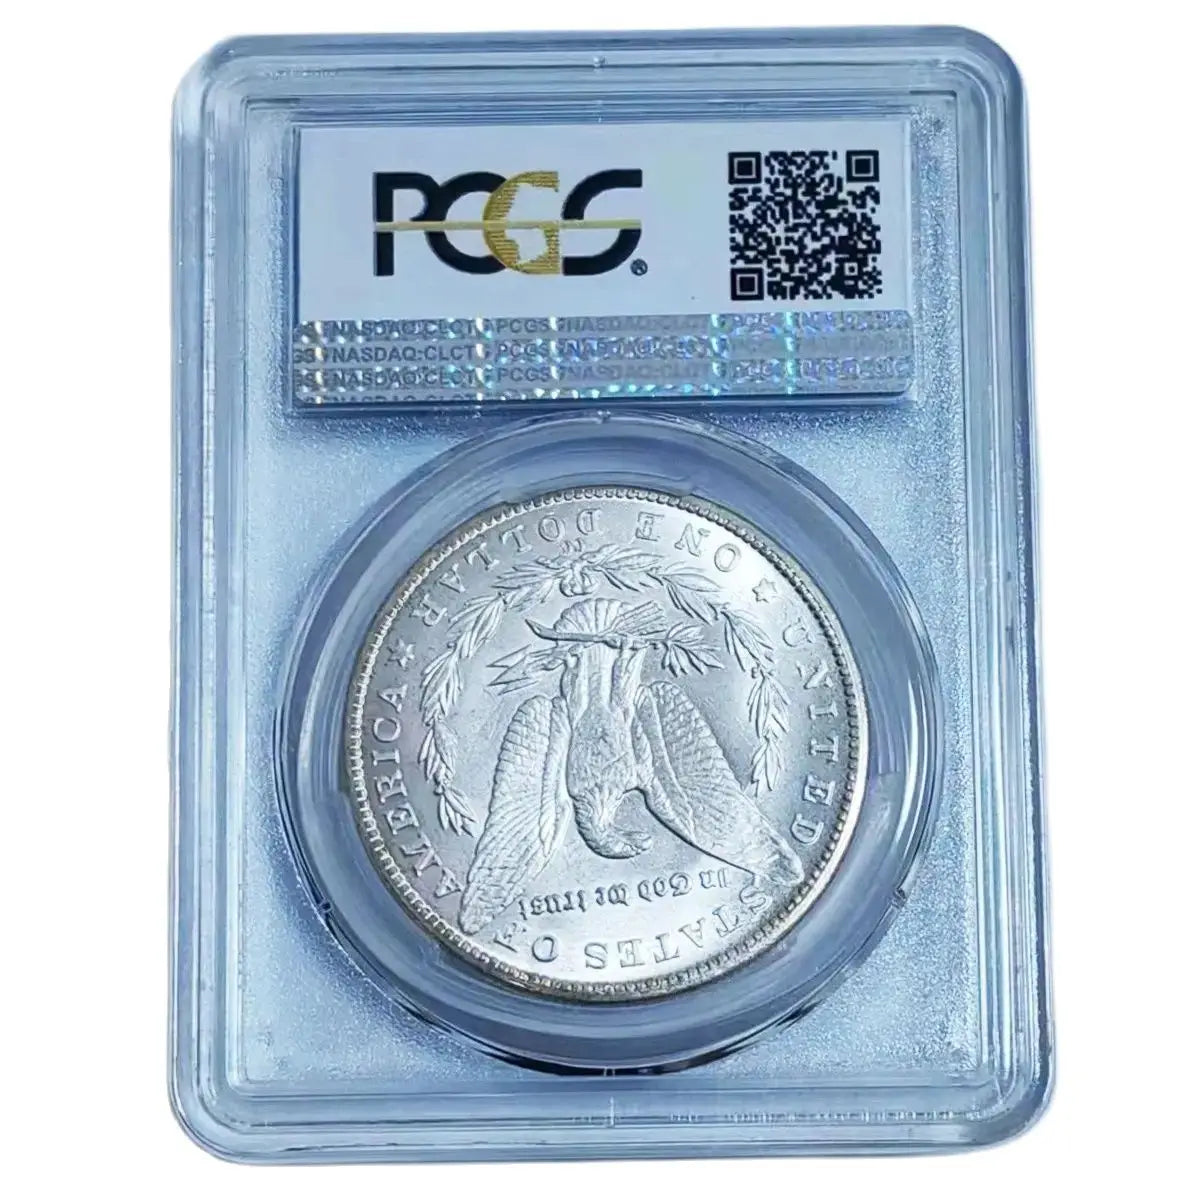 Rare Mint Condition 1891-CC Morgan Dollar - A True Historical Treasure"